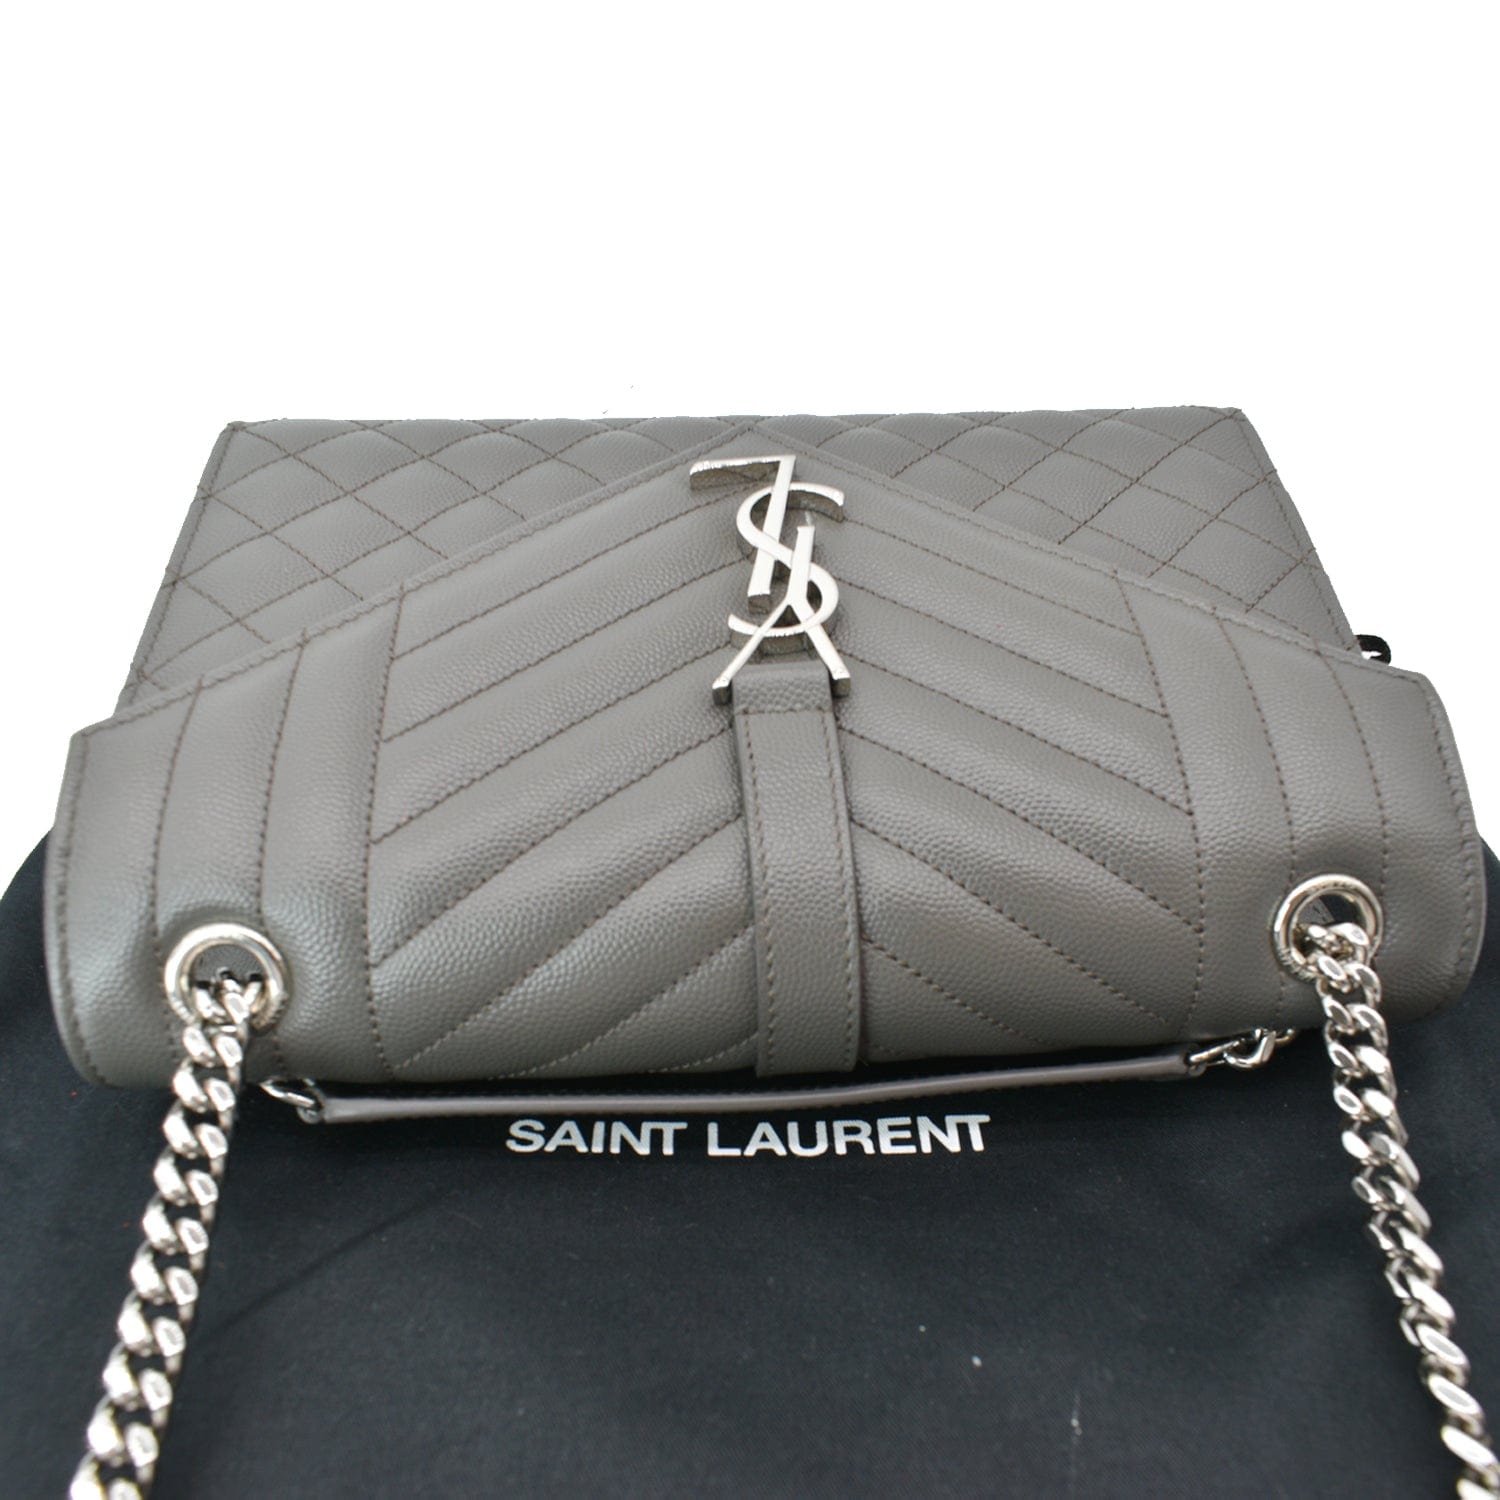 Saint Laurent Medium Envelope Monogram Matelasse Chain Bag